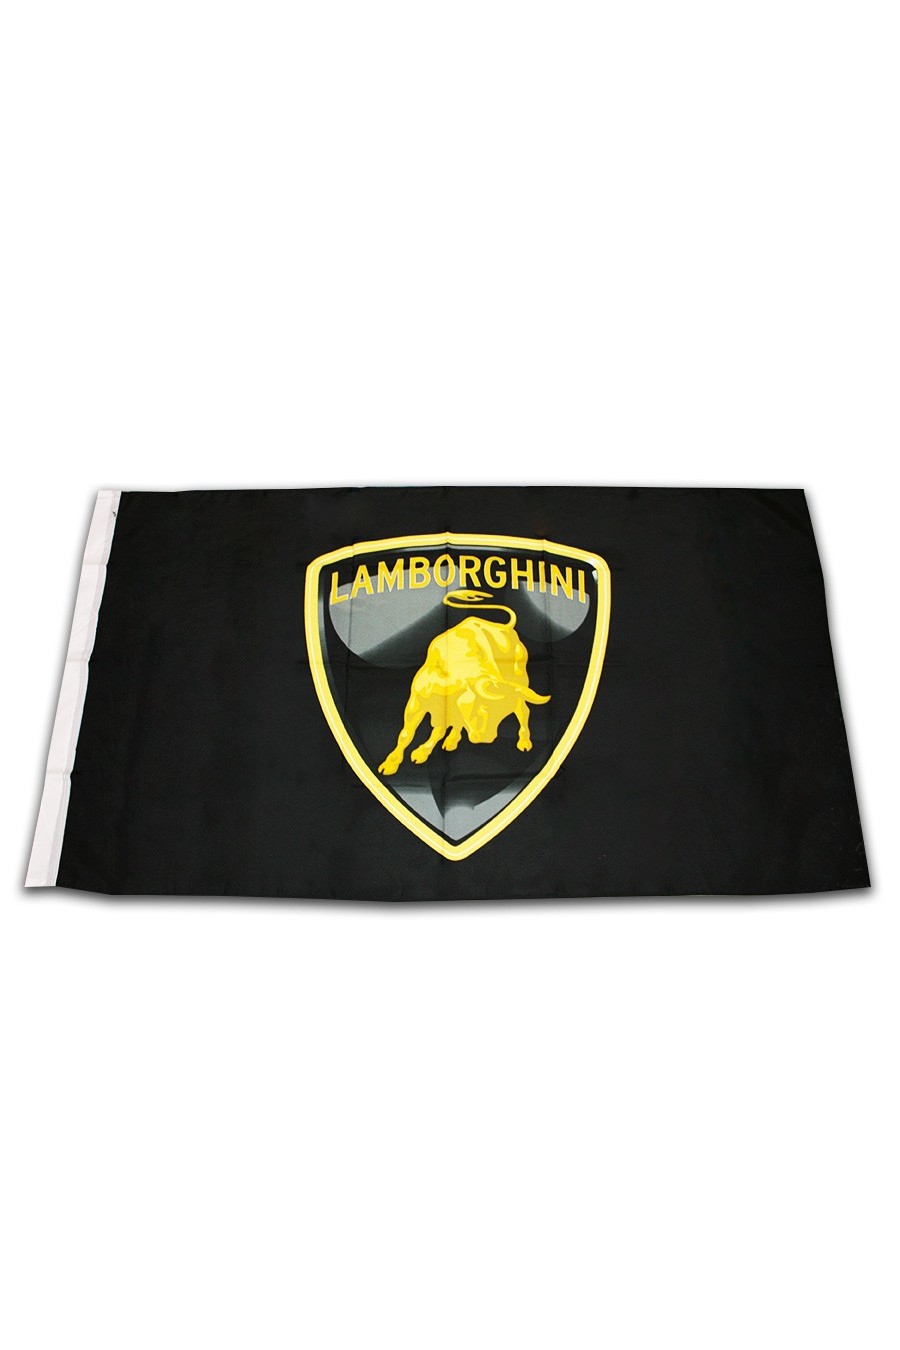 lamborghini flag